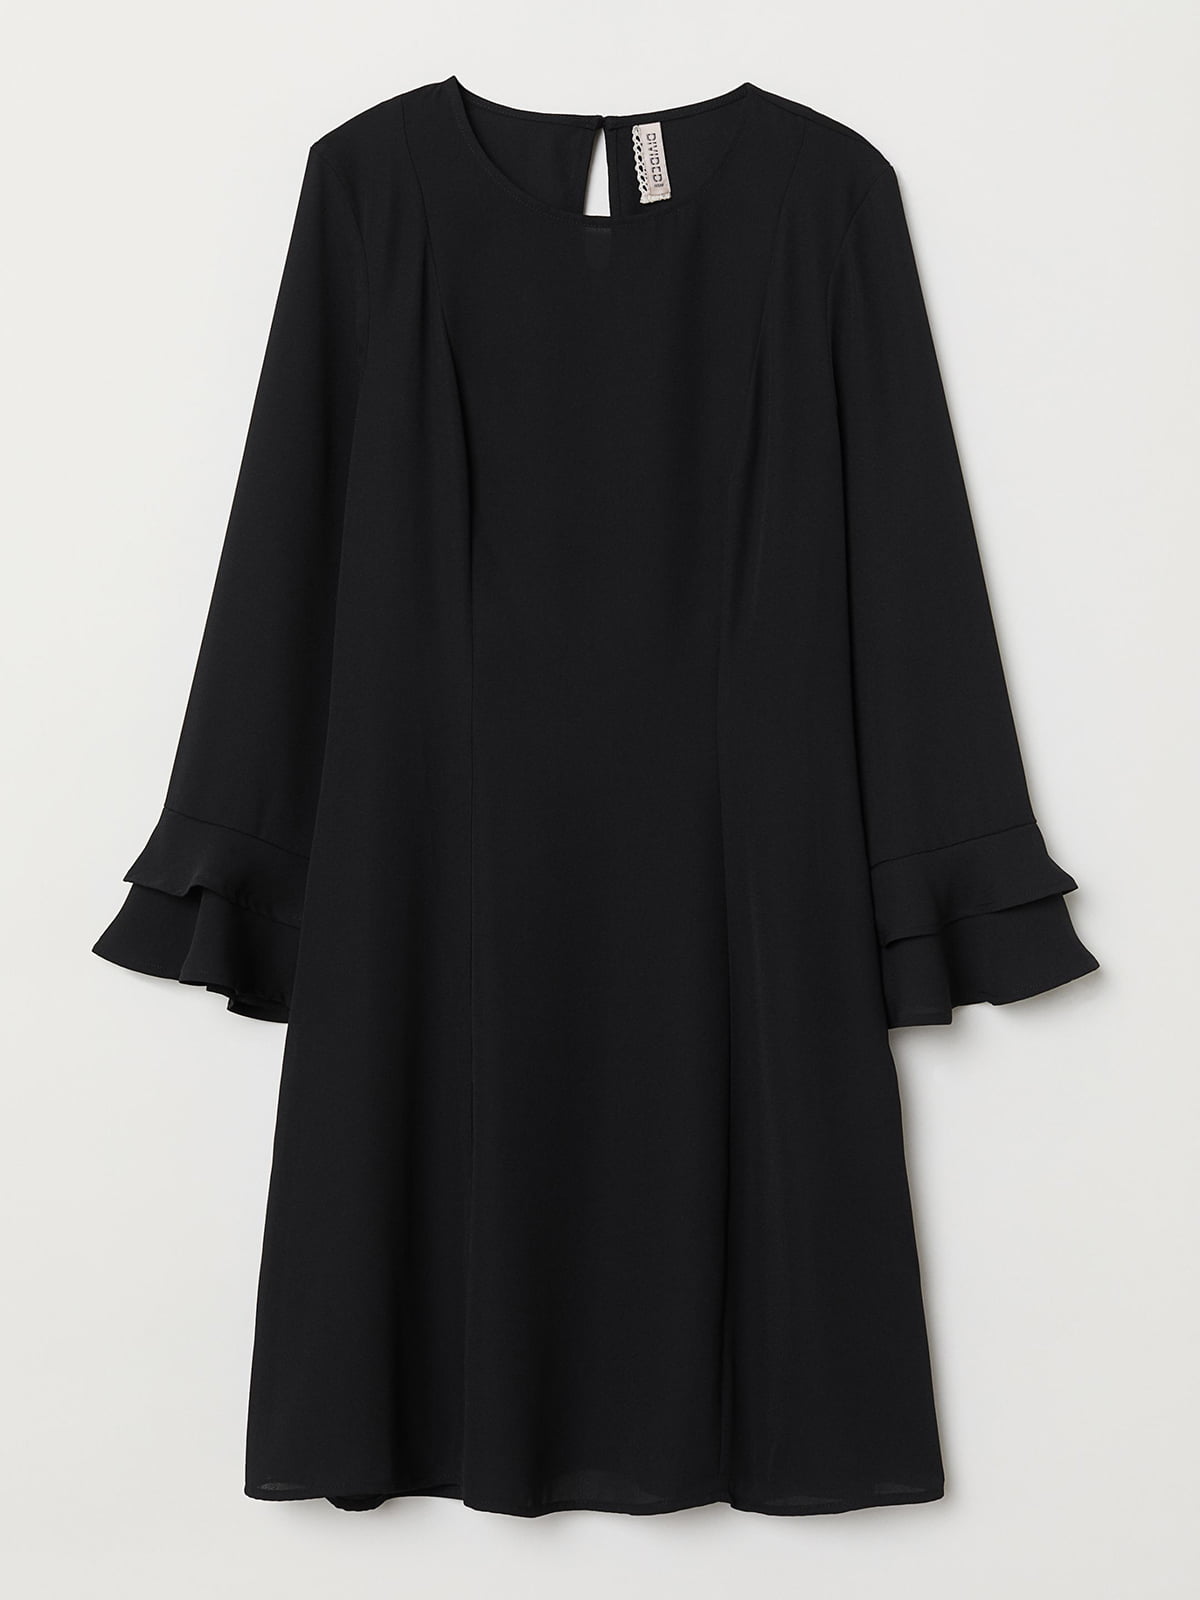 Сукня чорна | 5820591